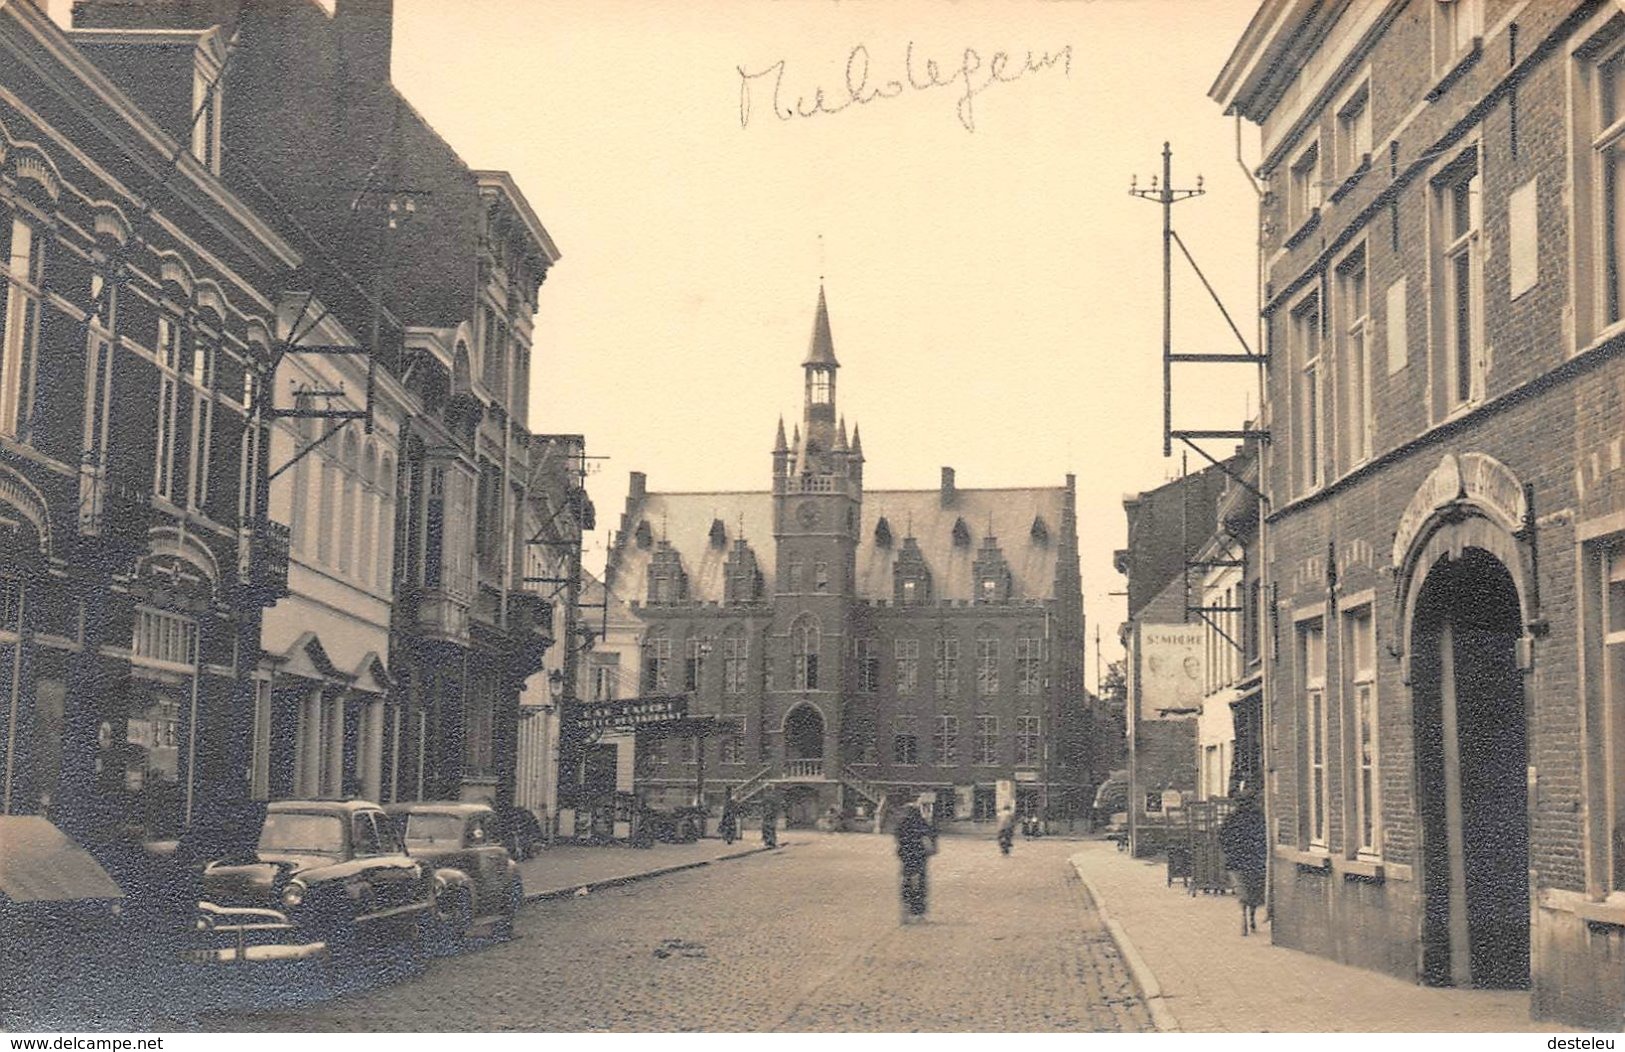 Fotokaart De Marktstraat -  Maldegem - Maldegem